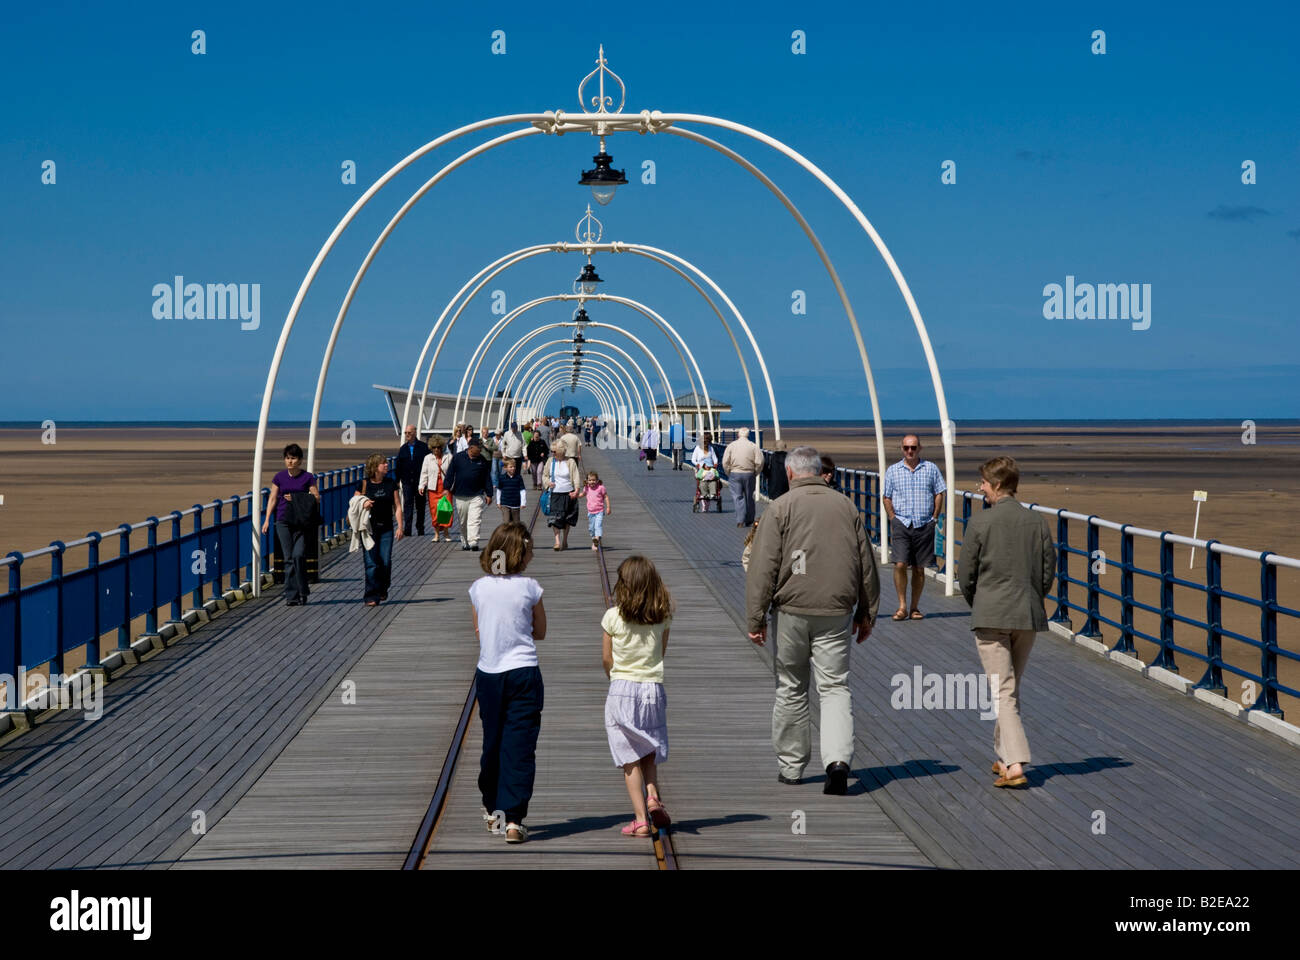 People walking on jetty Southport Lancashire England Stock Photo